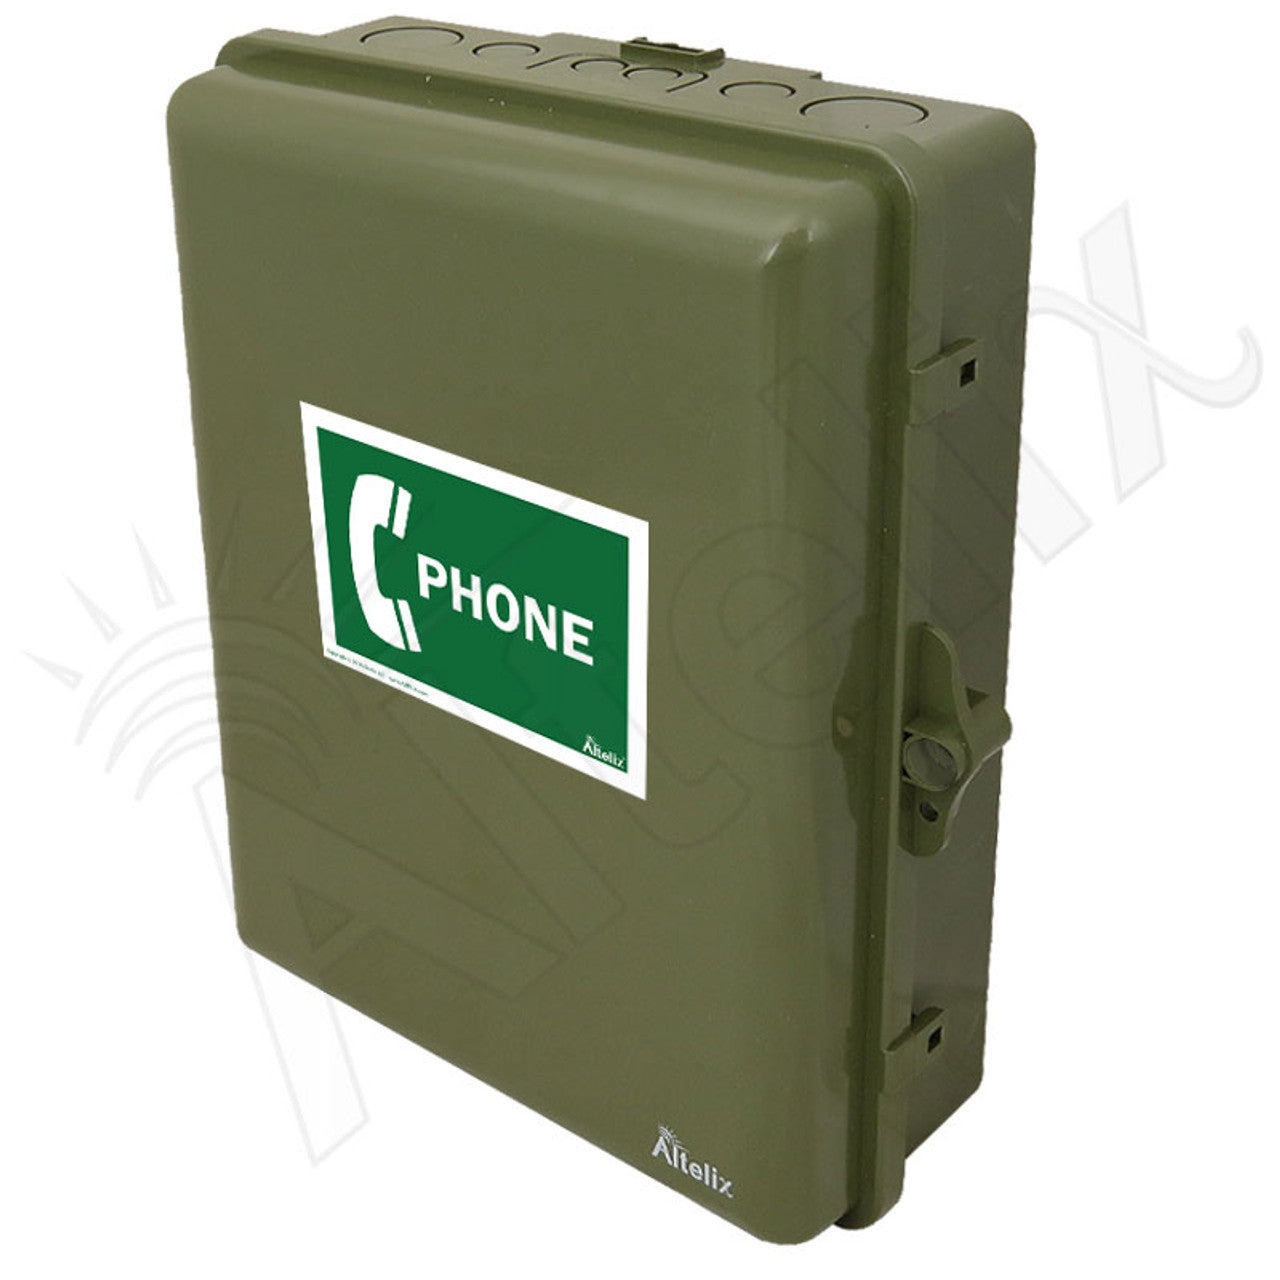 Altelix Outdoor Weatherproof Phone Call Box for Slim-Line Phones, 14x11x5 with Phone Label